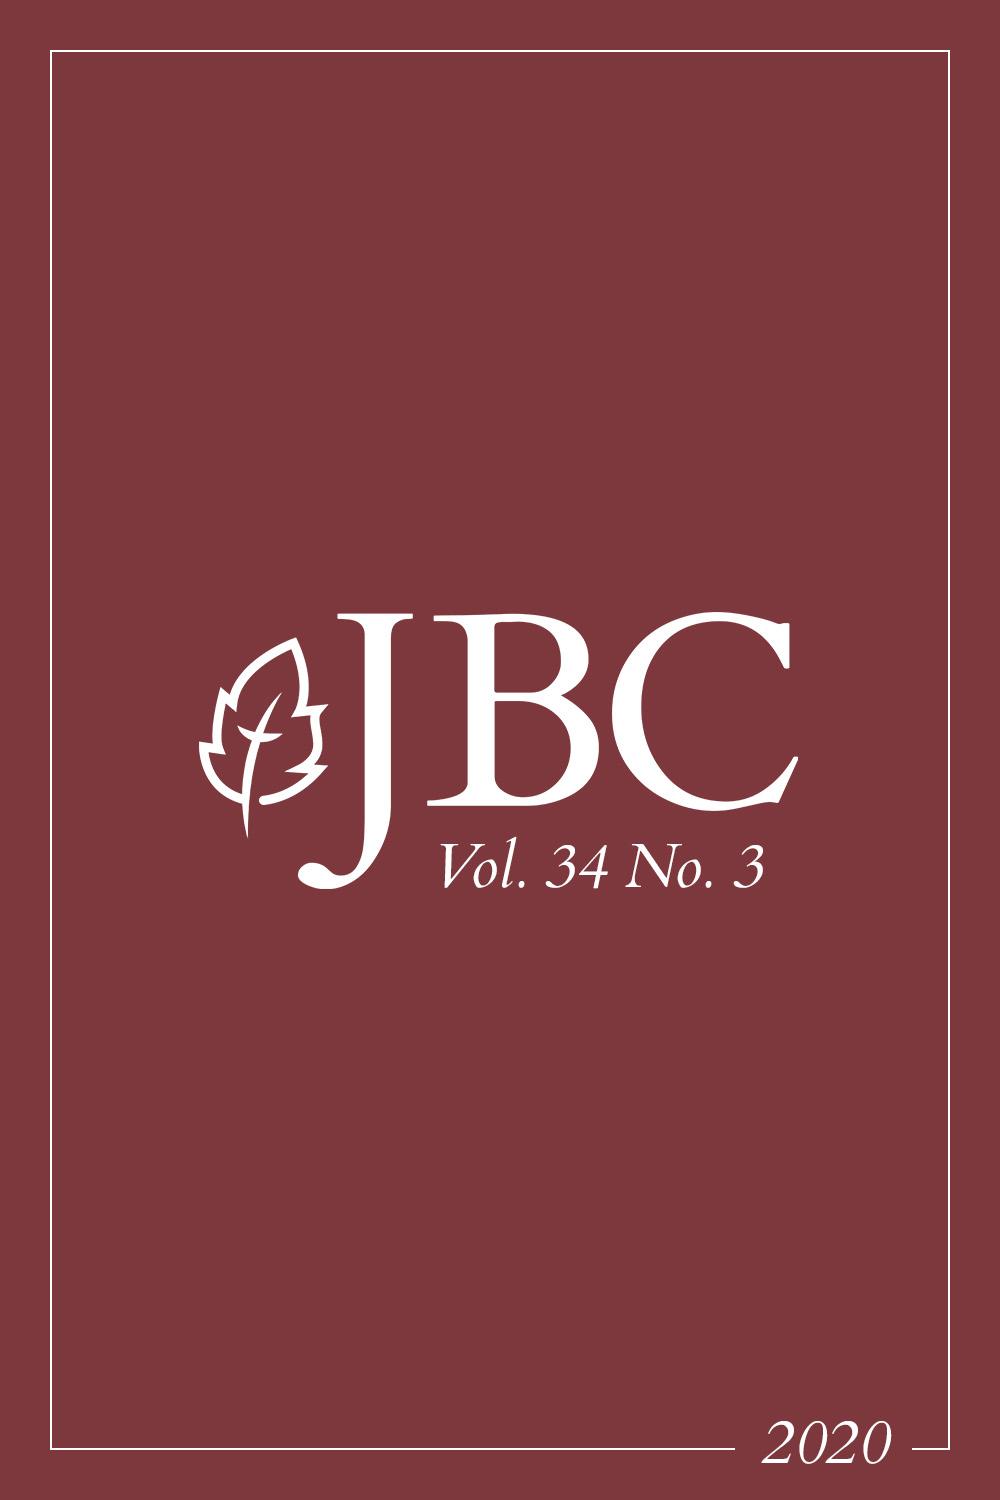 JBC Volume 34:3 (2020) PDF Featured Image